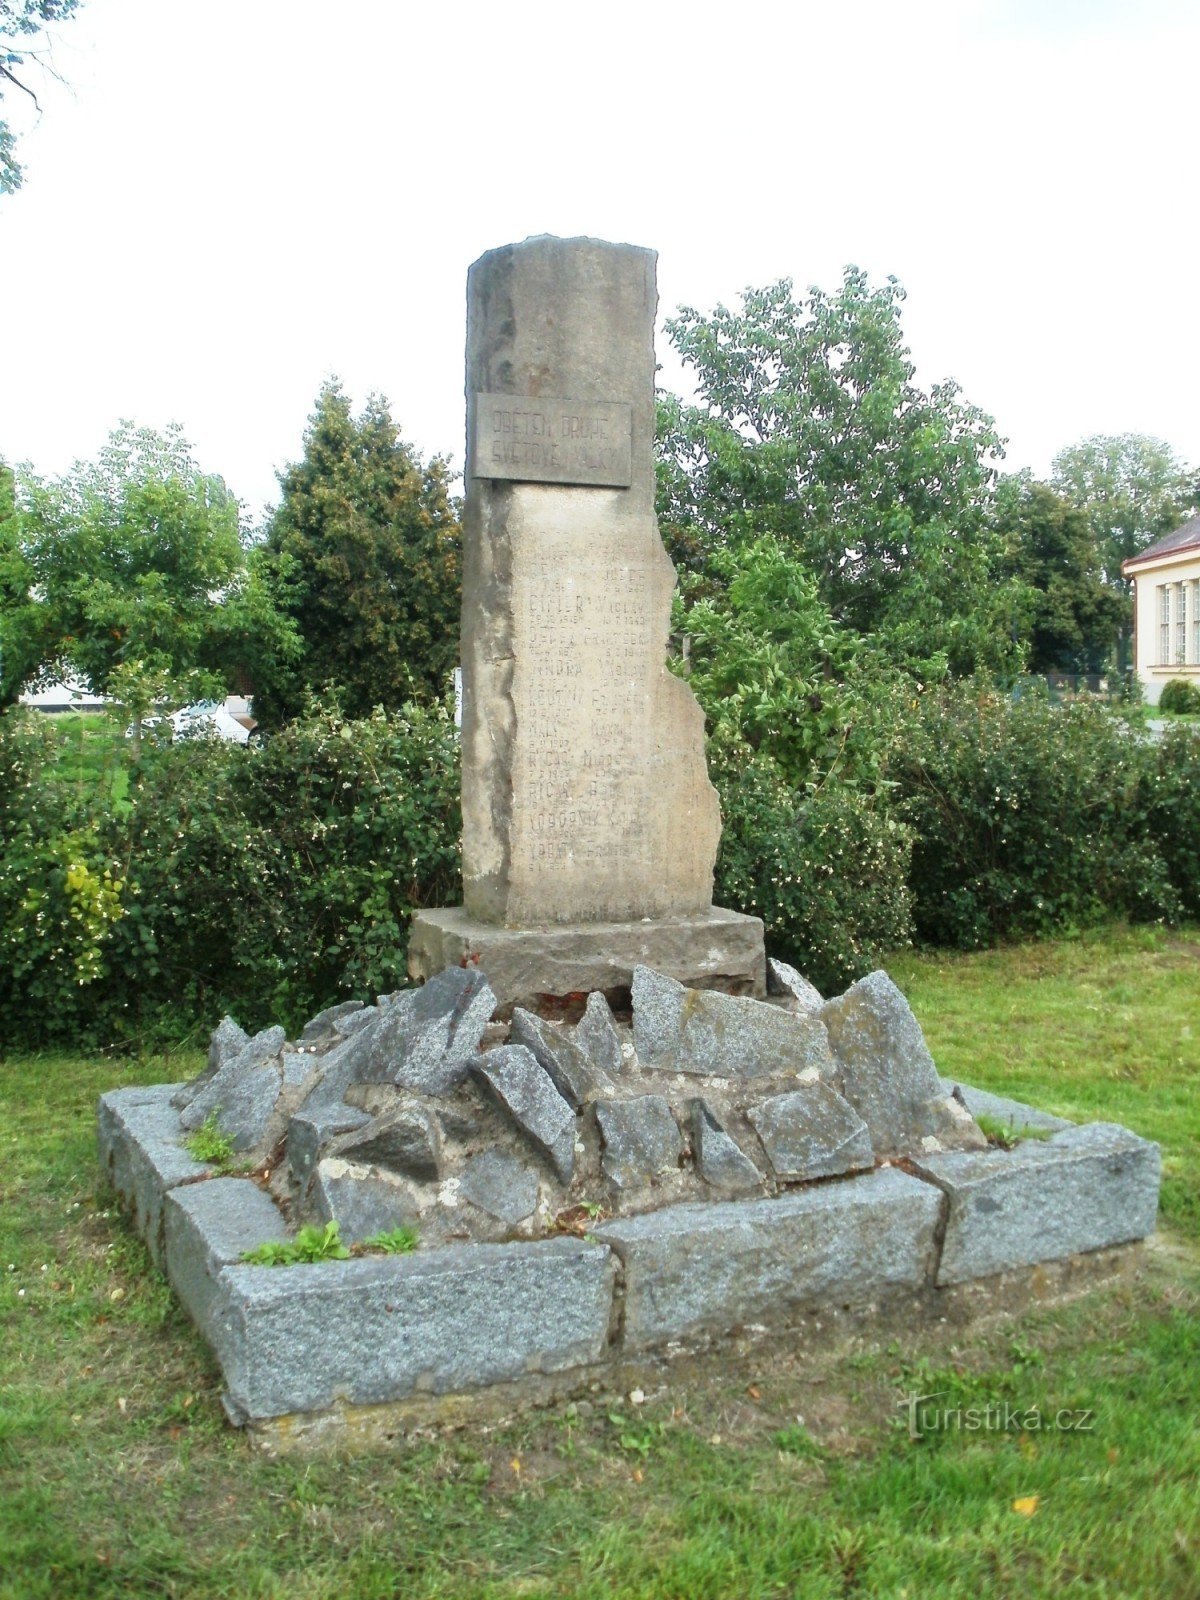 Градец Кралове - Плотиште-над-Лабем - памятник жертвам 2-го Св. война